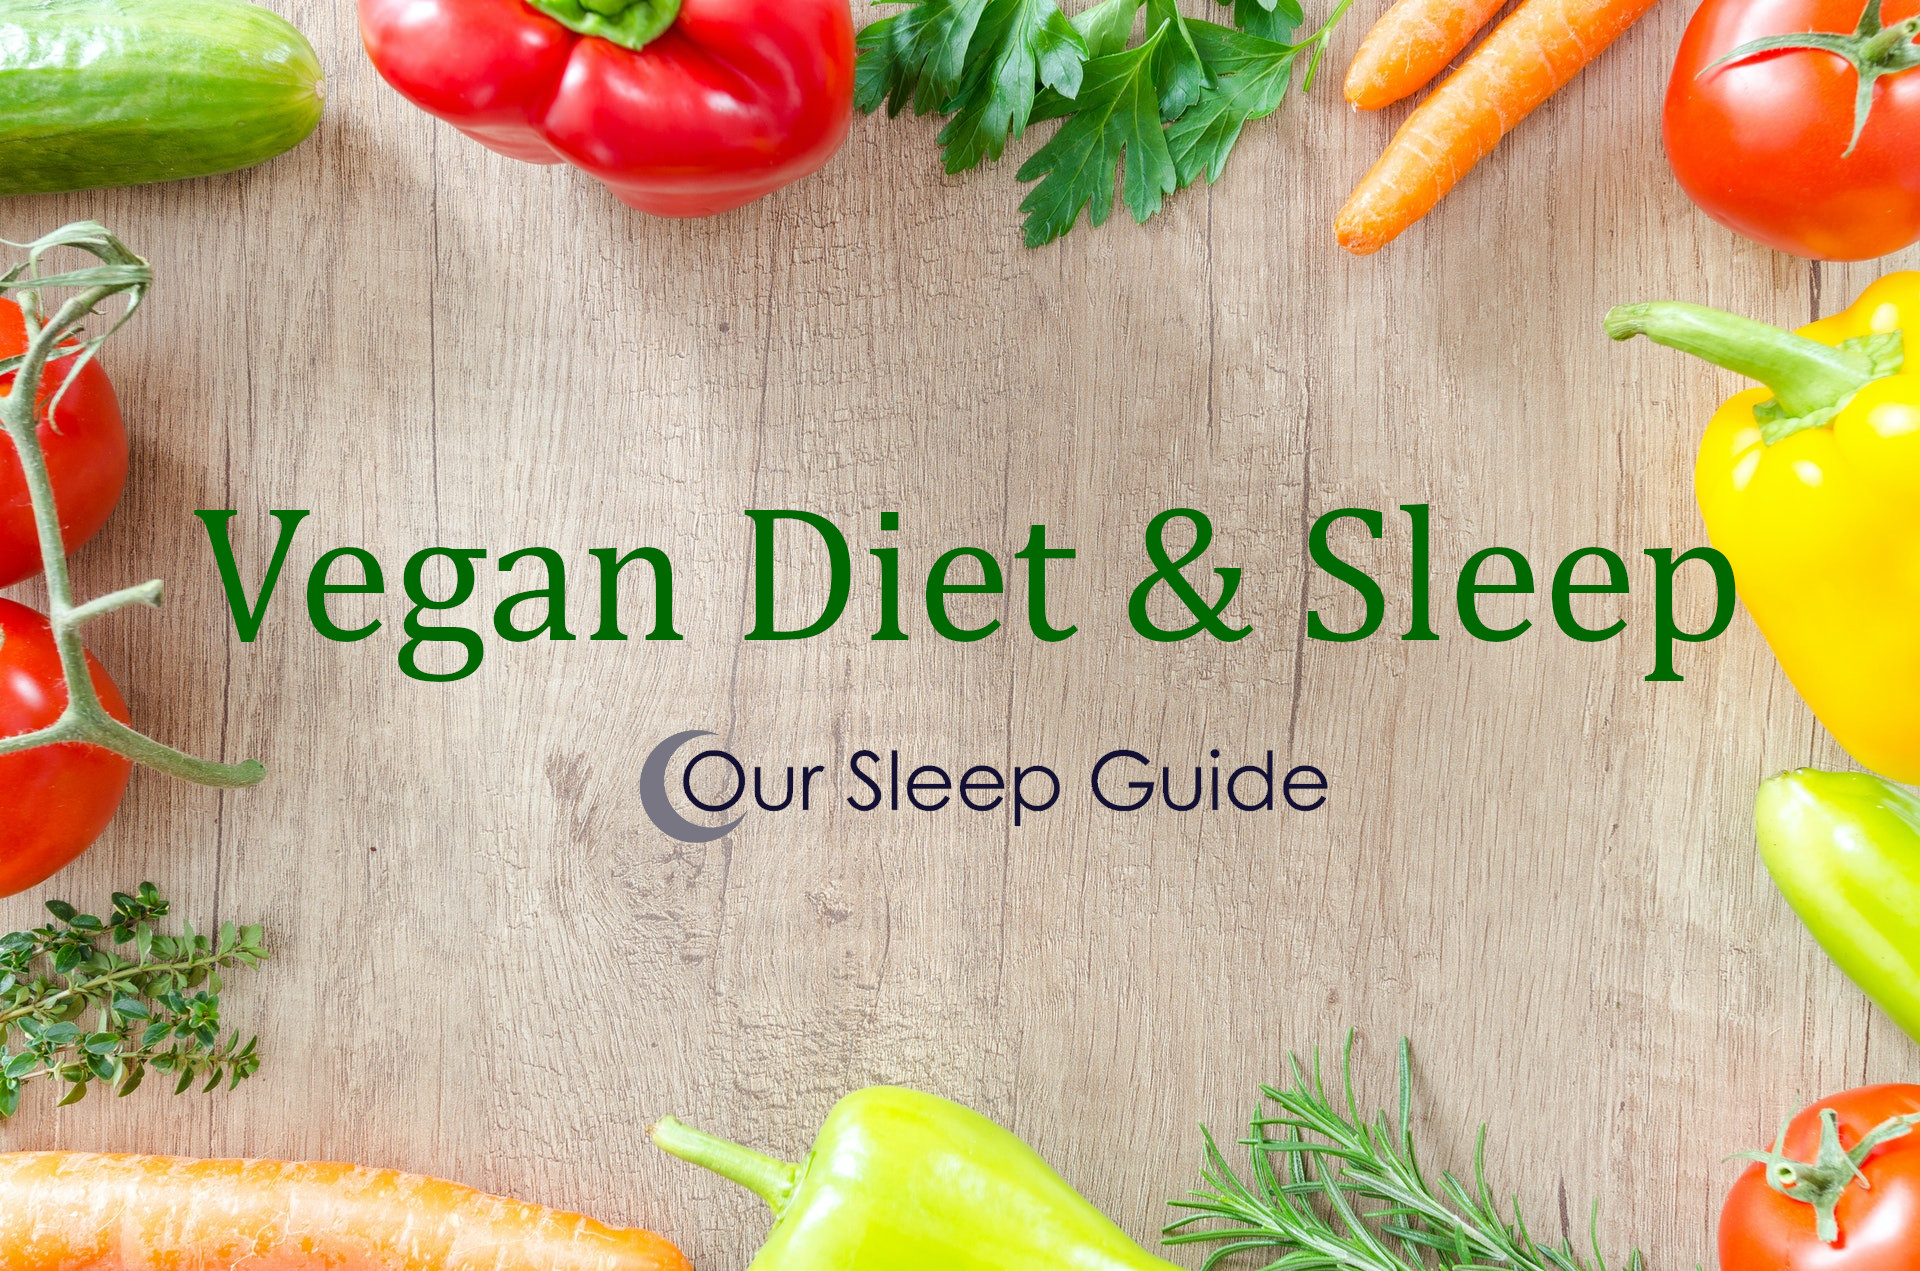 can a vegan diet improve your sleep?